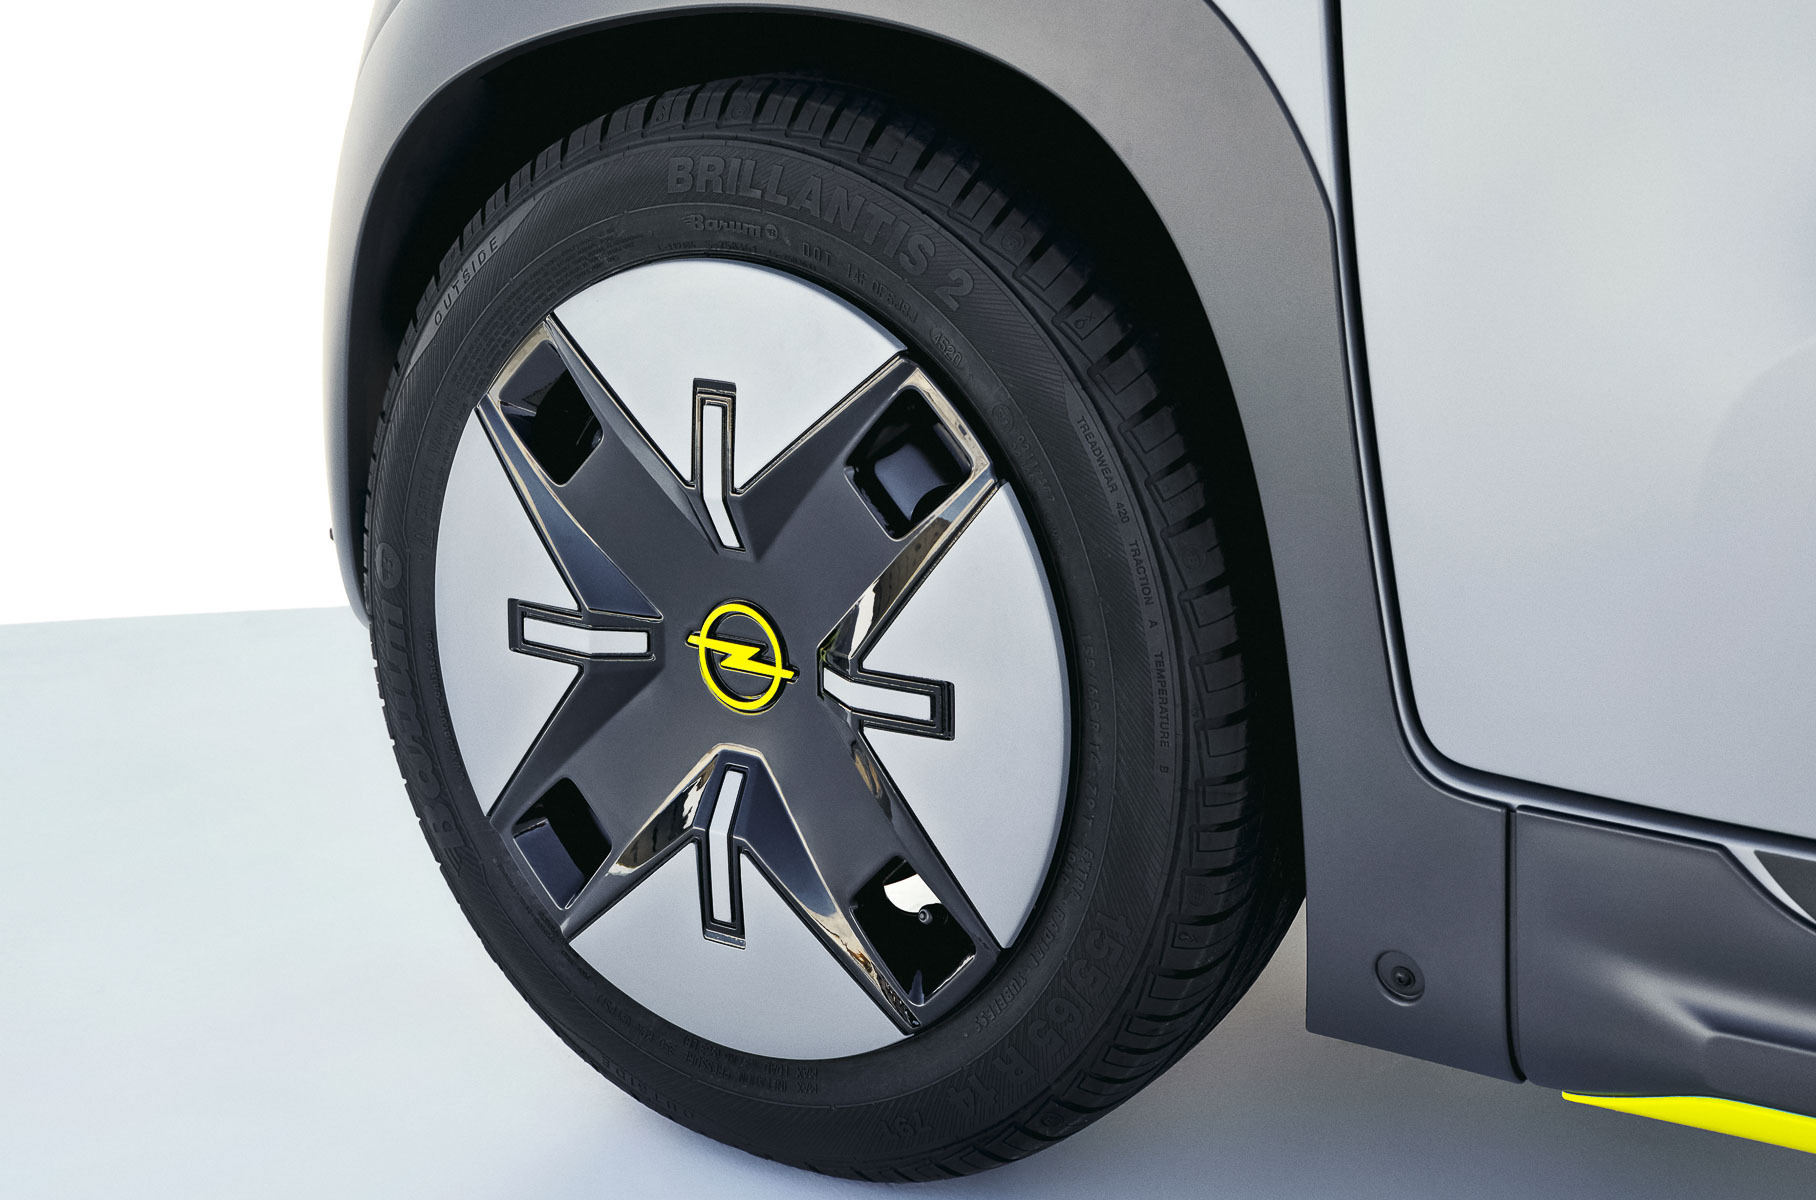 Opel представил электрокар, за руль которого пустят с 15 лет. Но не везде